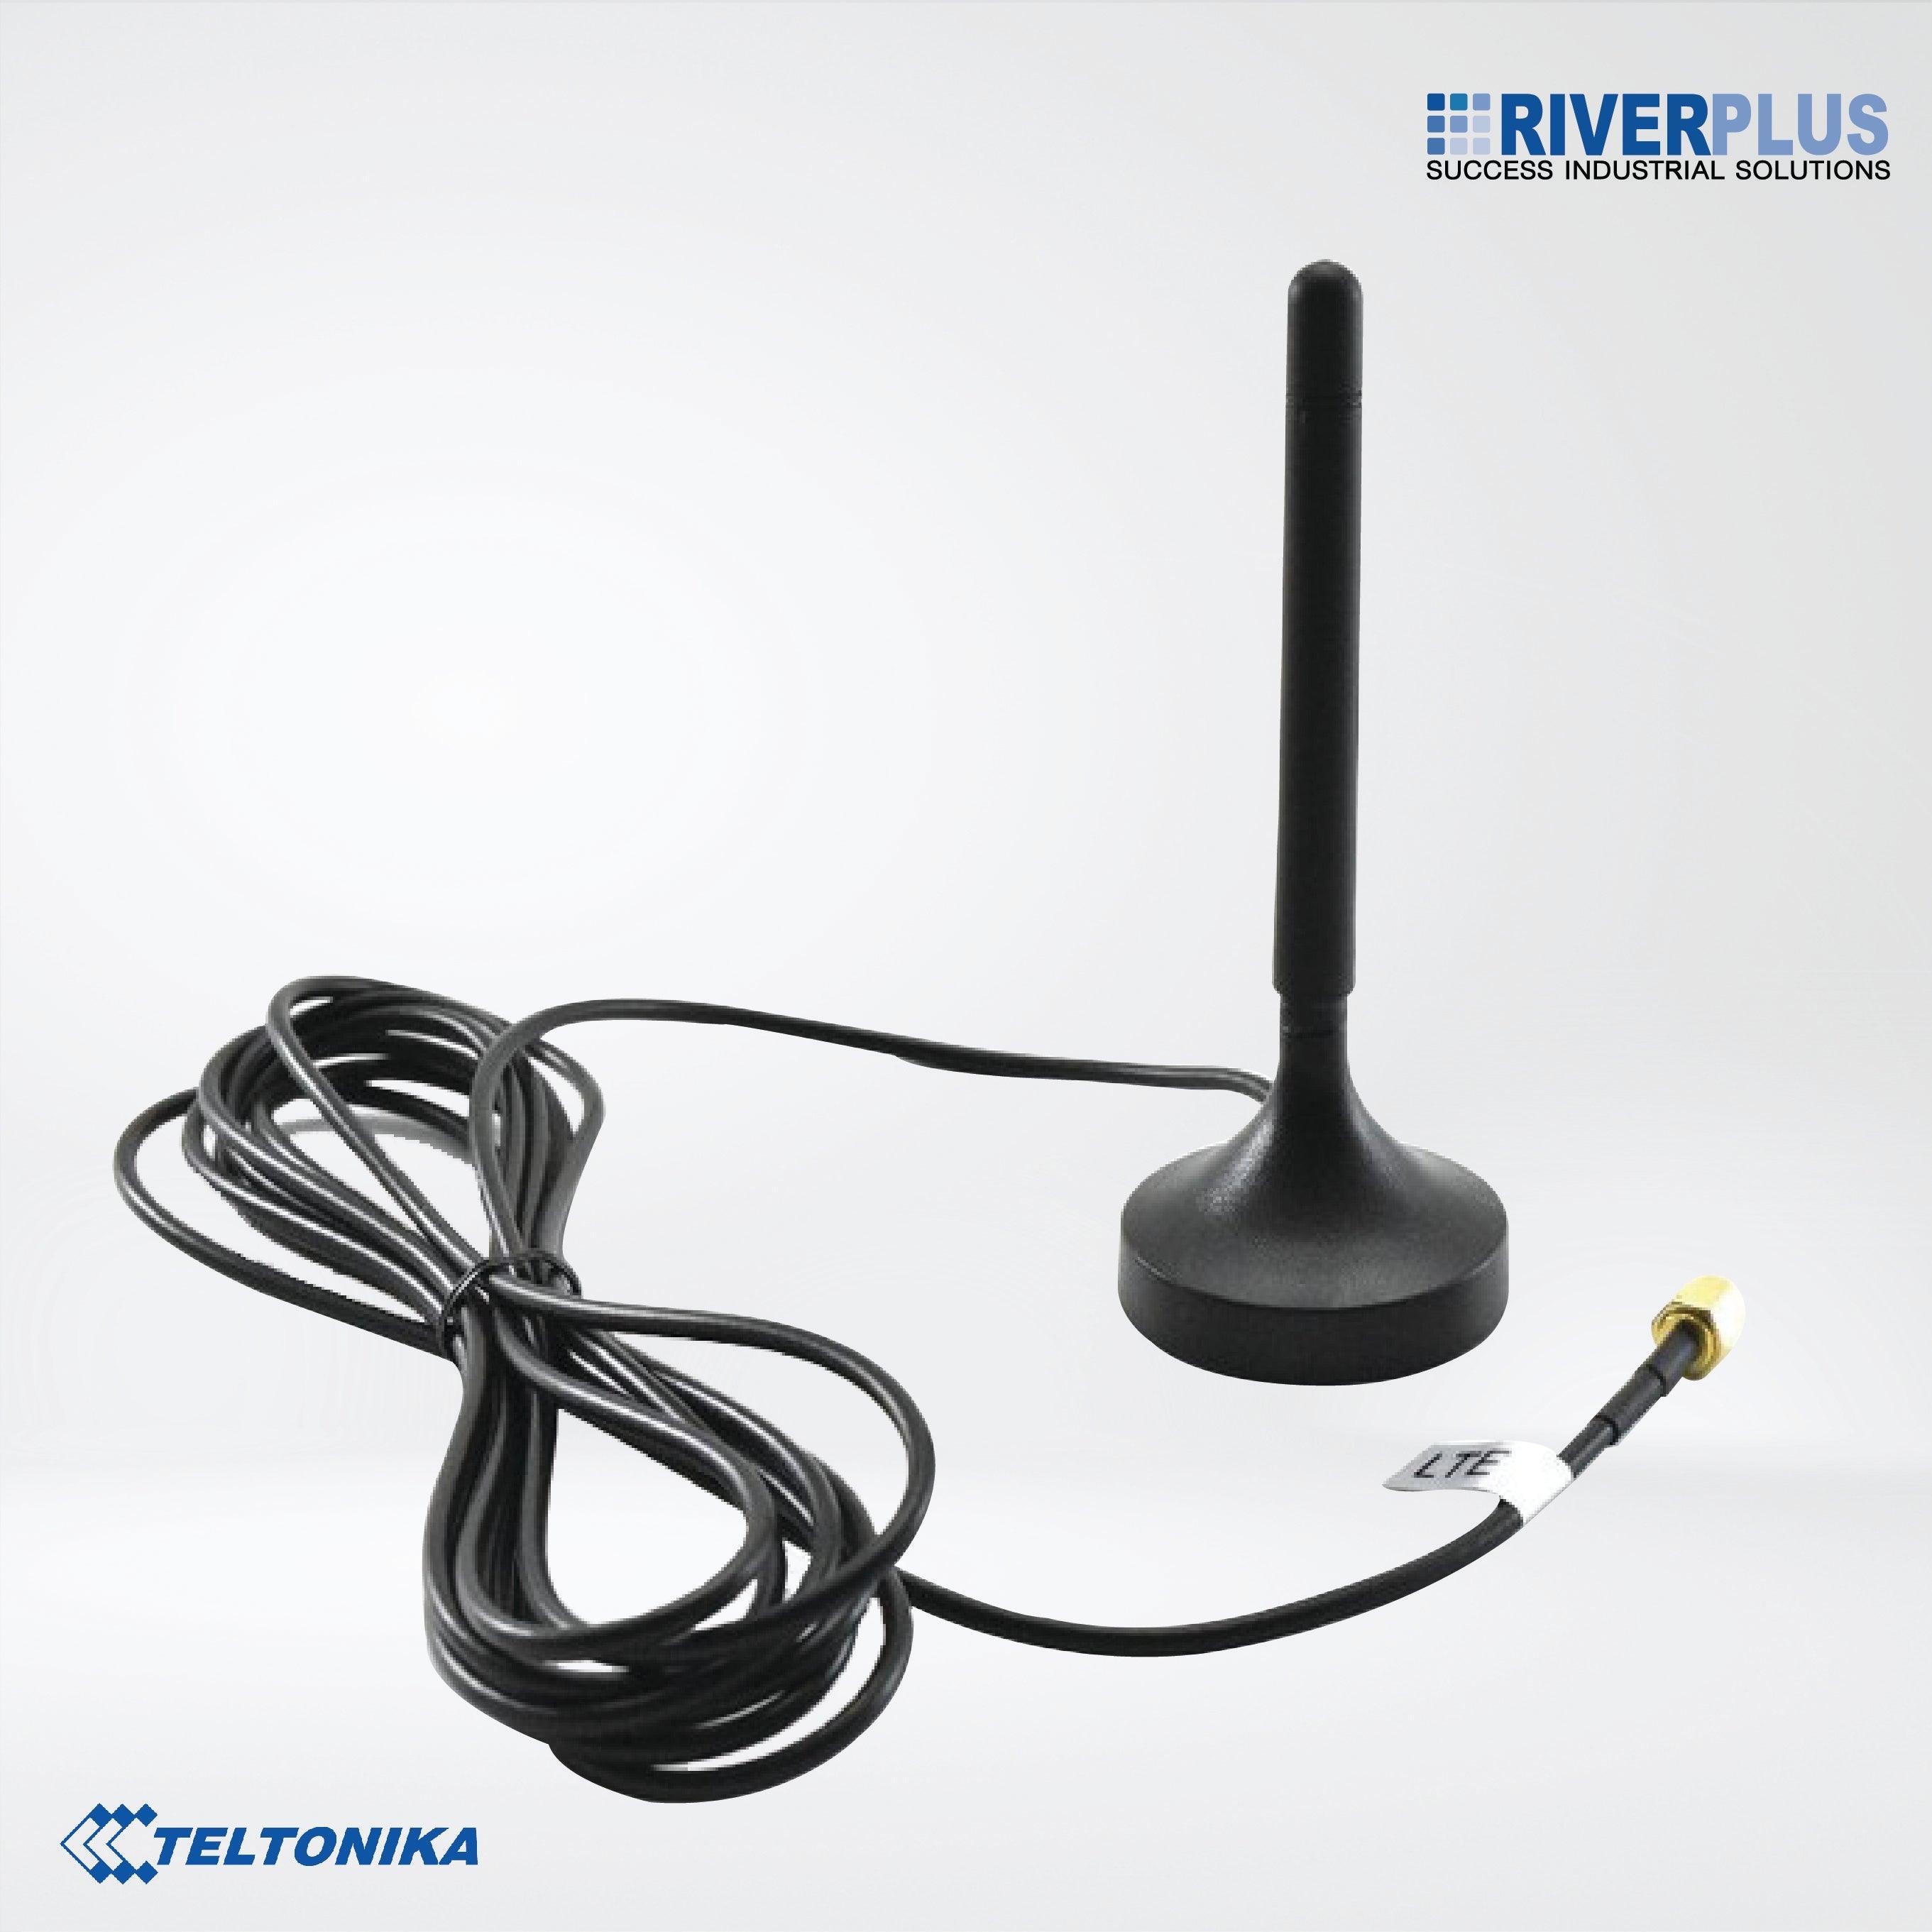 PR1KS210 Mobile Magnetic SMA Antenna - Riverplus